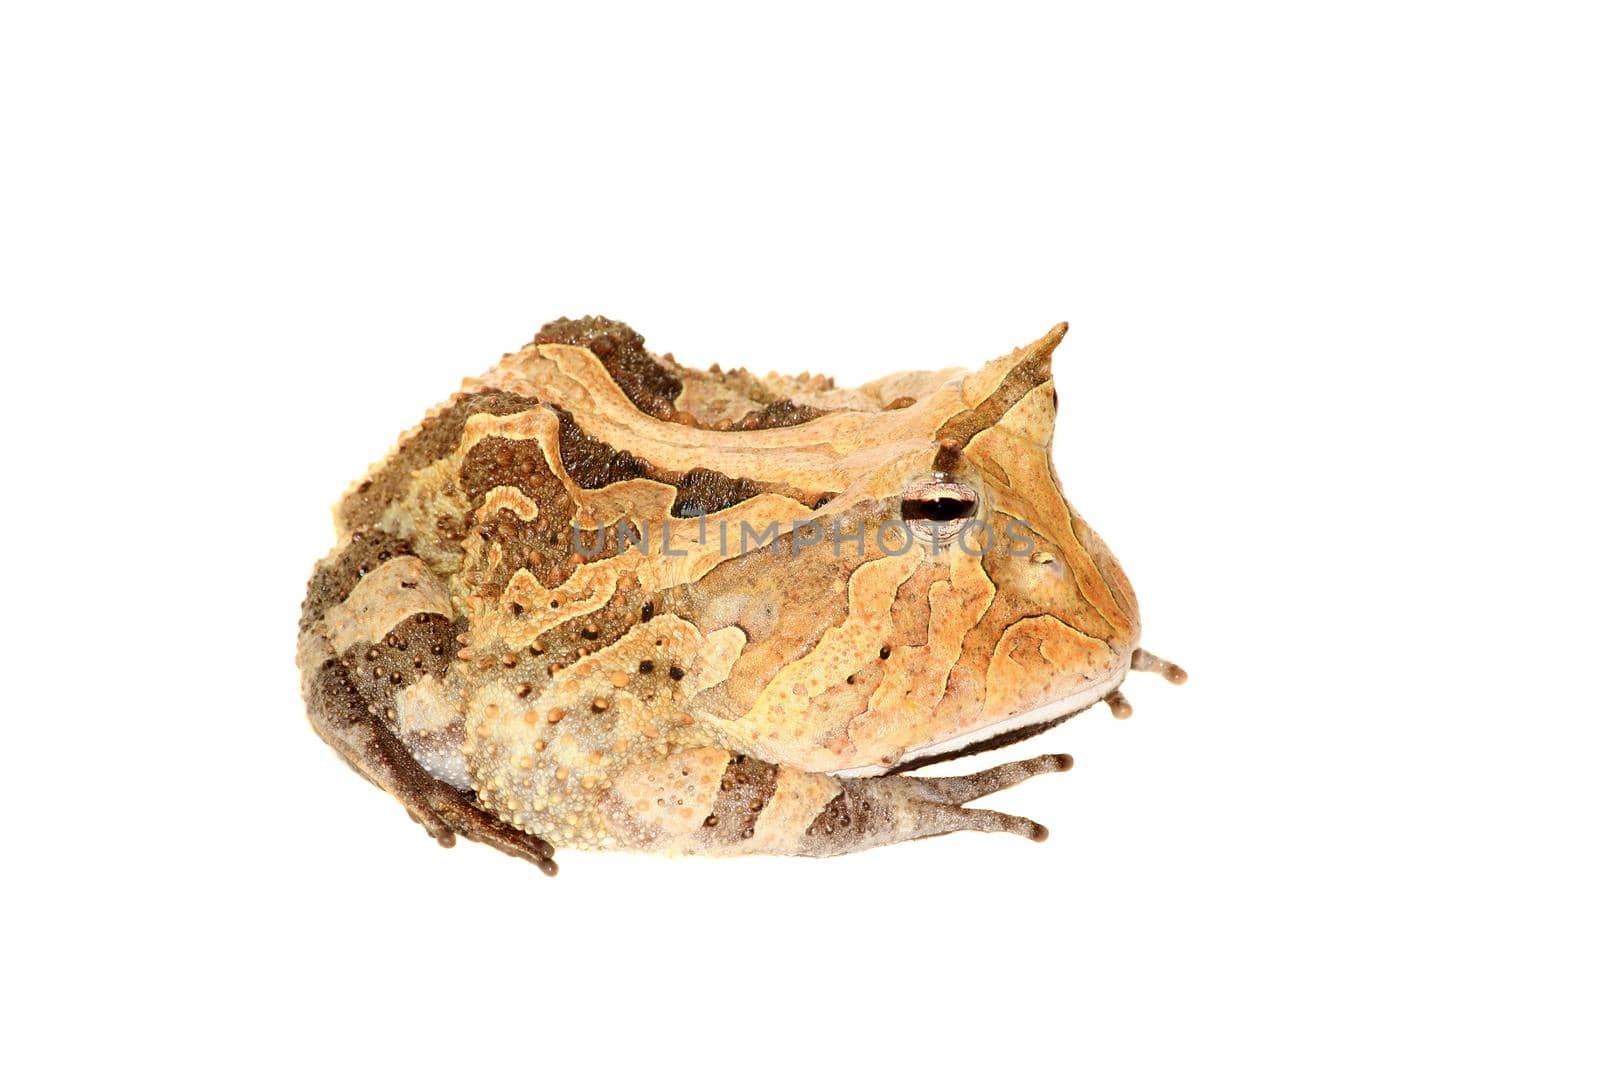 The Surinam horned frog, Ceratophrys cornuta, isolated on white background